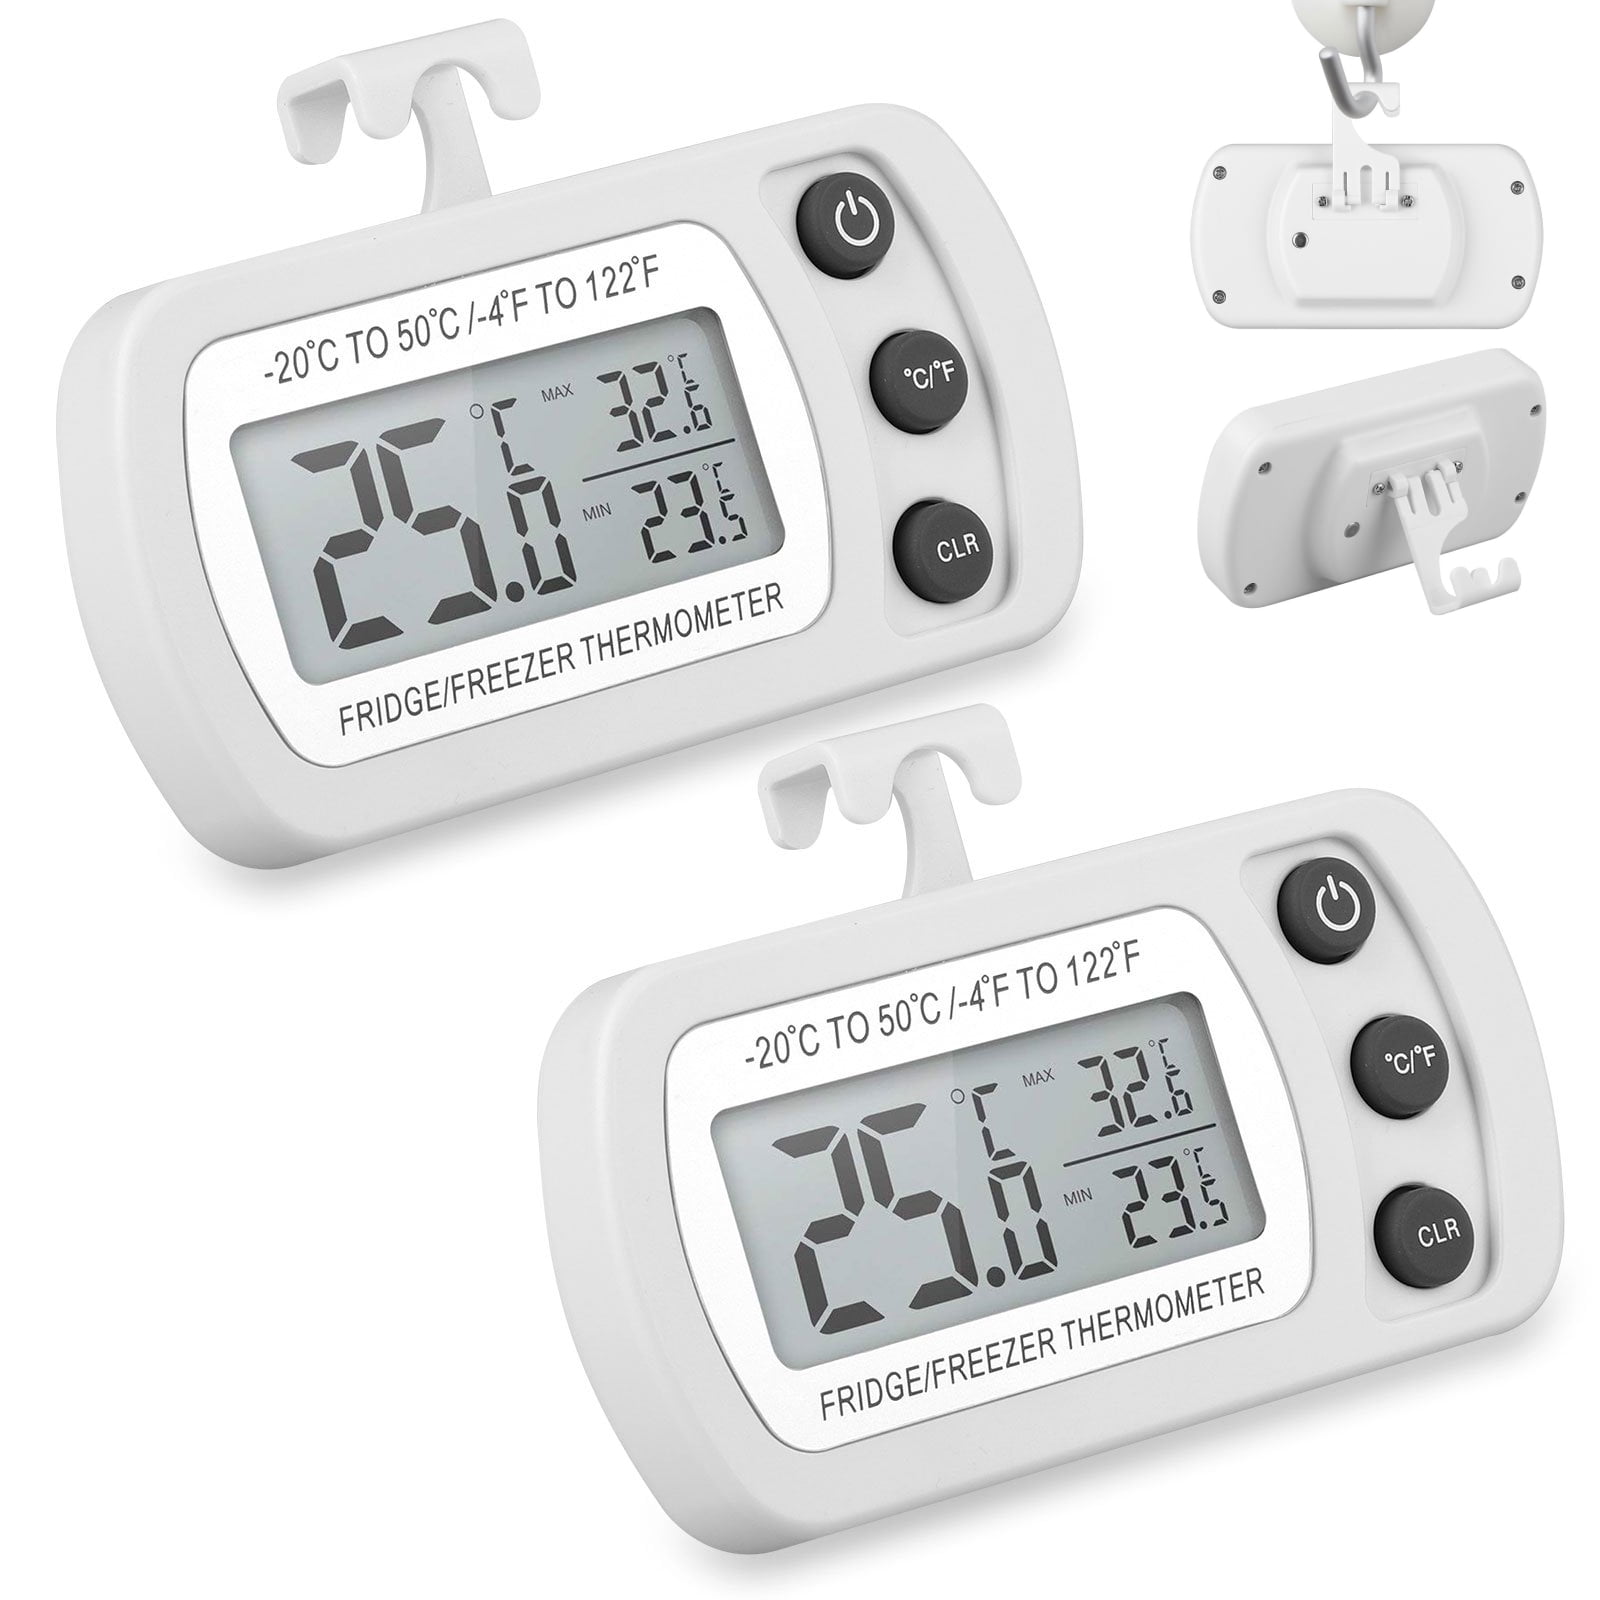 Digital Fridge/Freezer Thermometer with Min/Max and Alarm - Solmedia